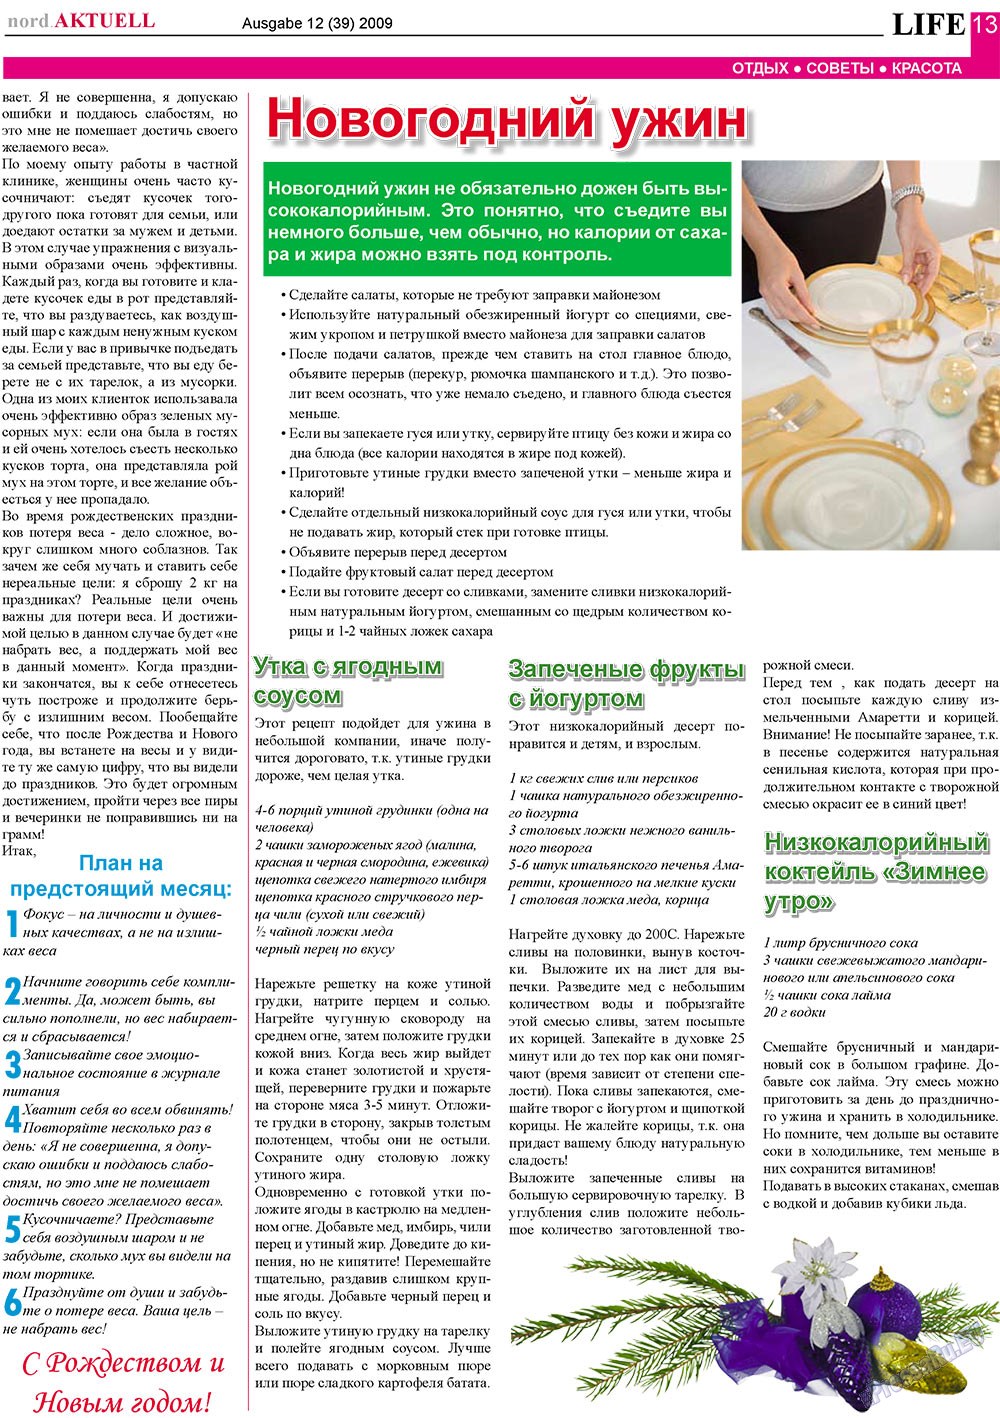 nord.Aktuell, газета. 2009 №12 стр.13